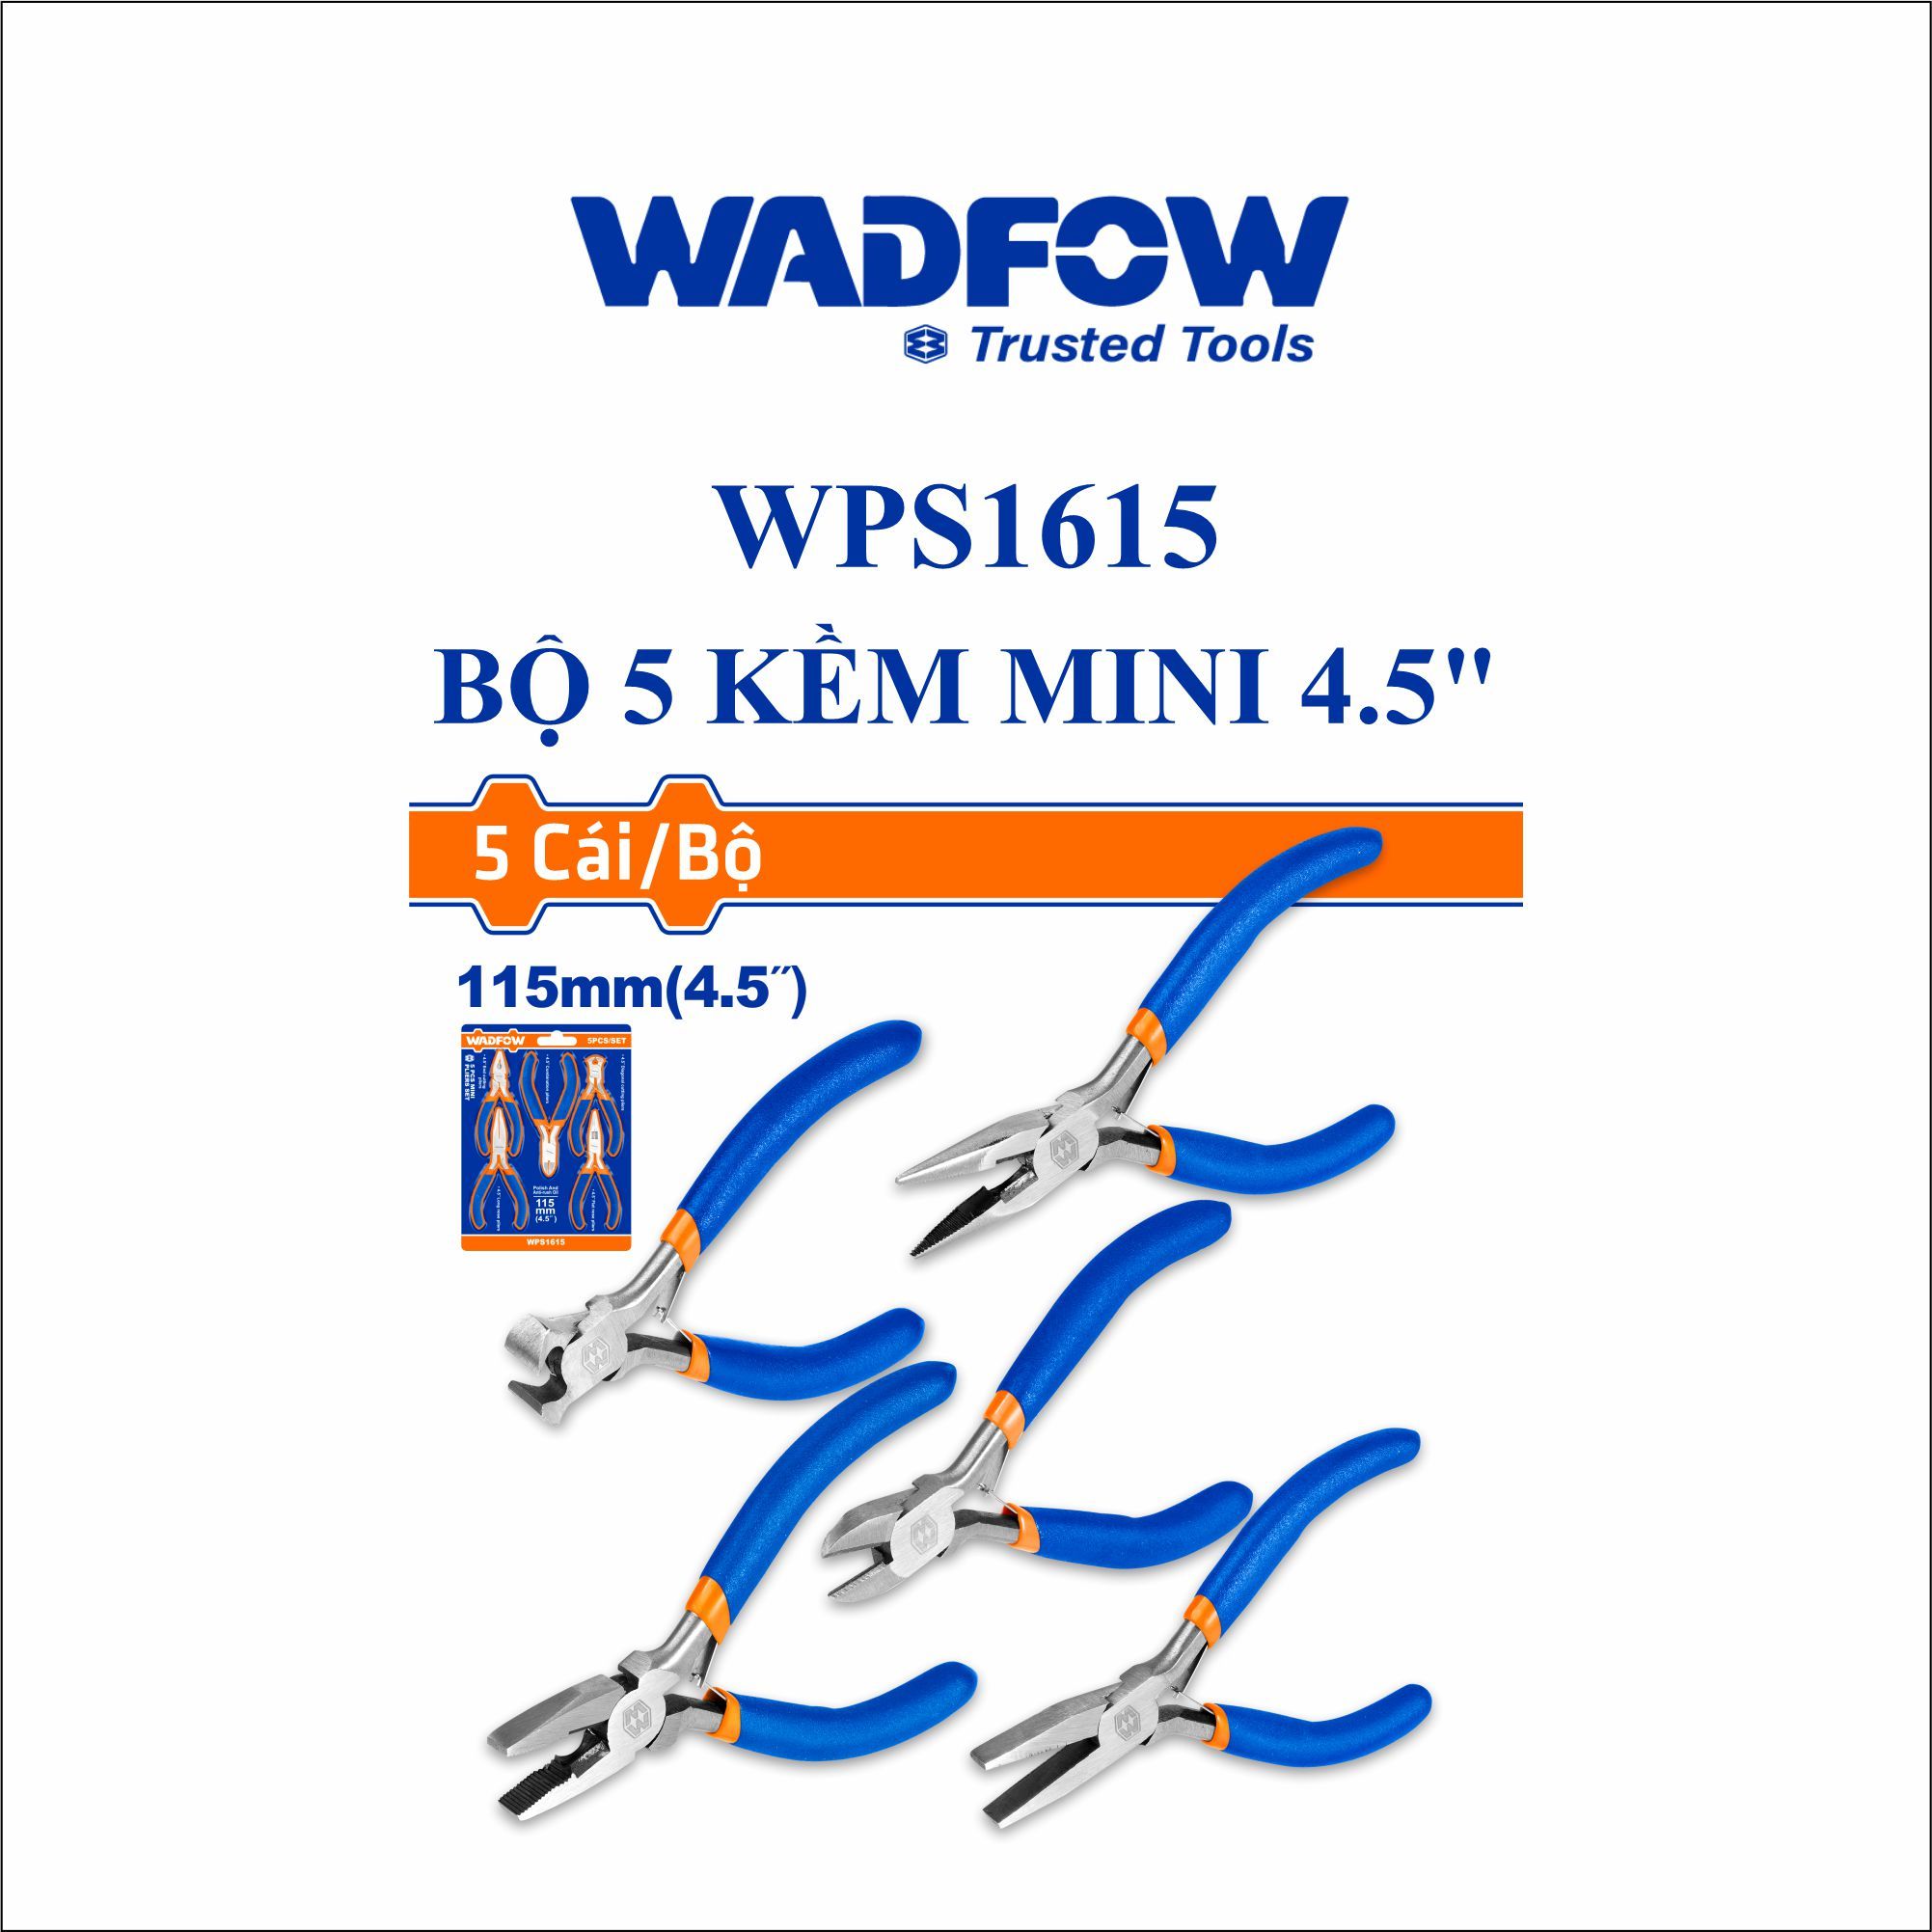  Bộ 5 Kìm mini 4.5 Inch WADFOW WPS1615 